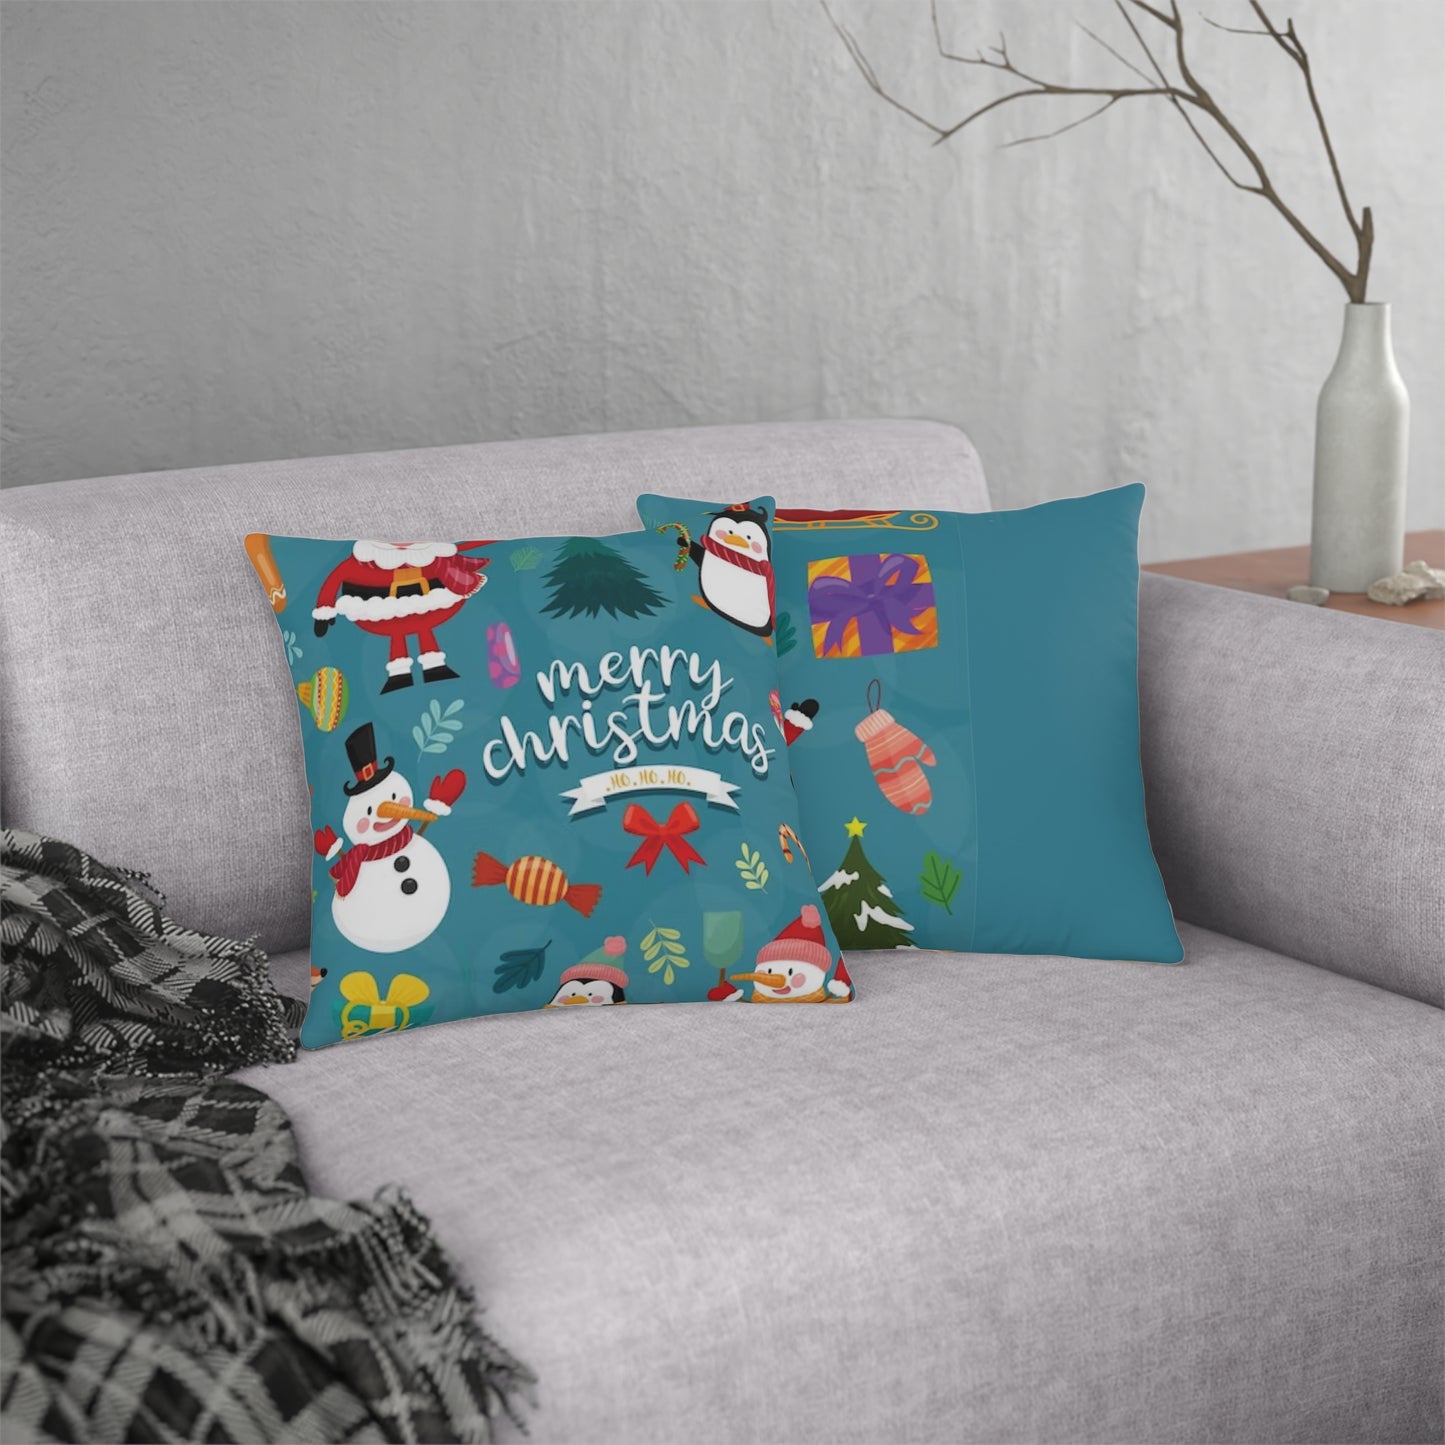 Christmas Waterproof Pillows